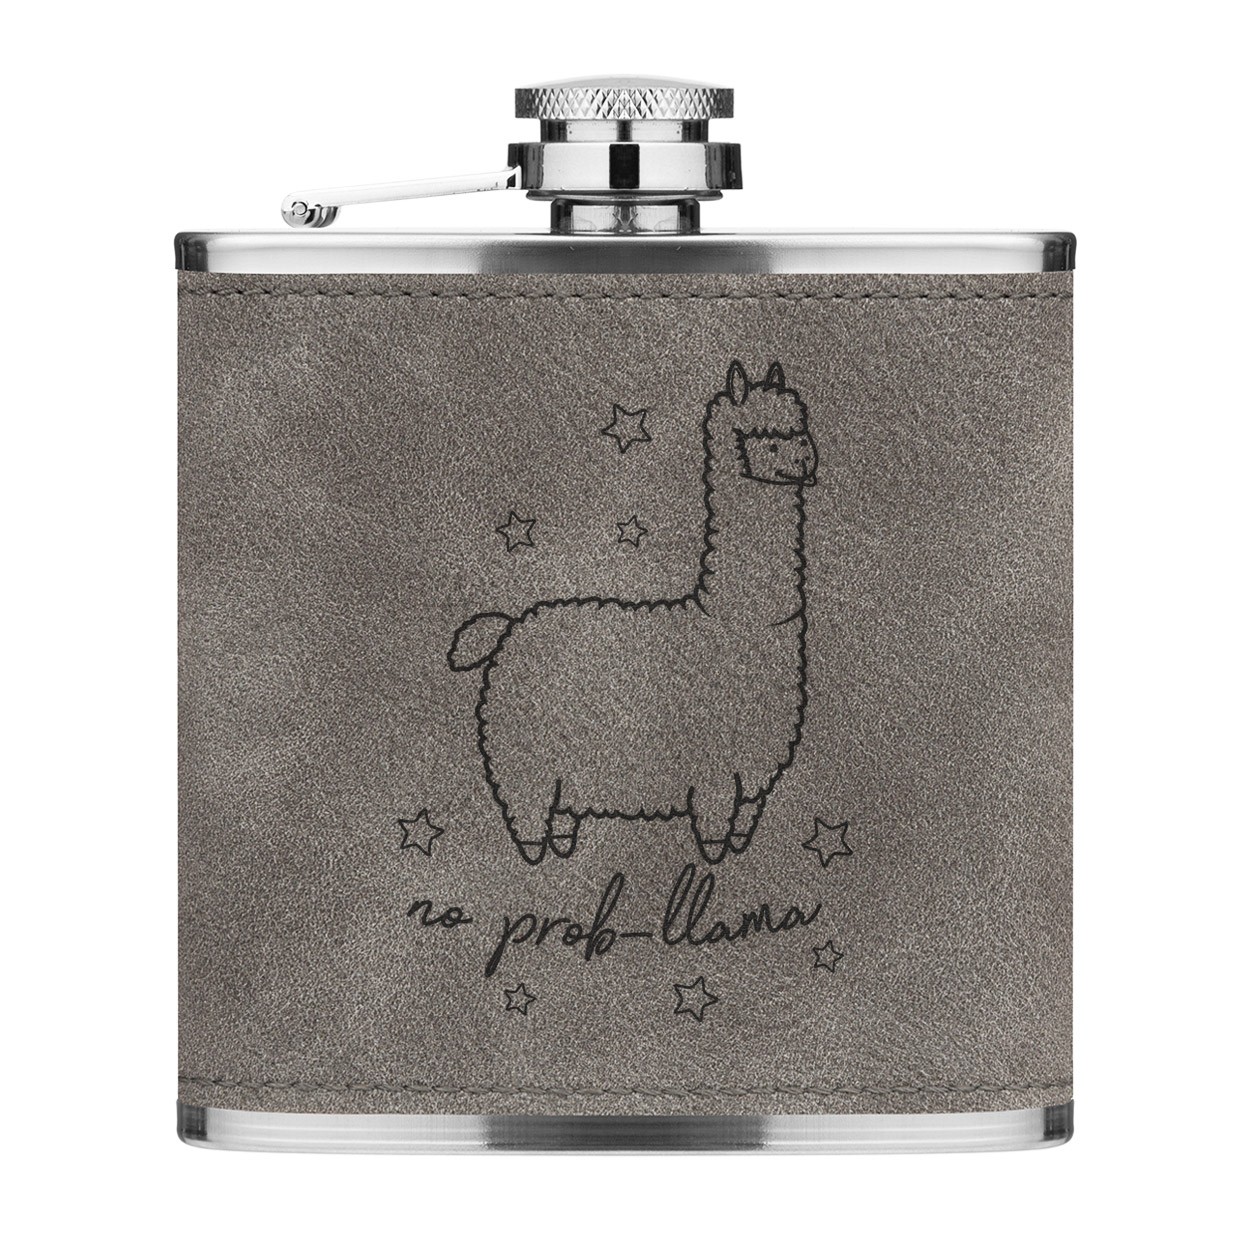 No Prob-Llama 6oz PU Leather Hip Flask Grey Luxe